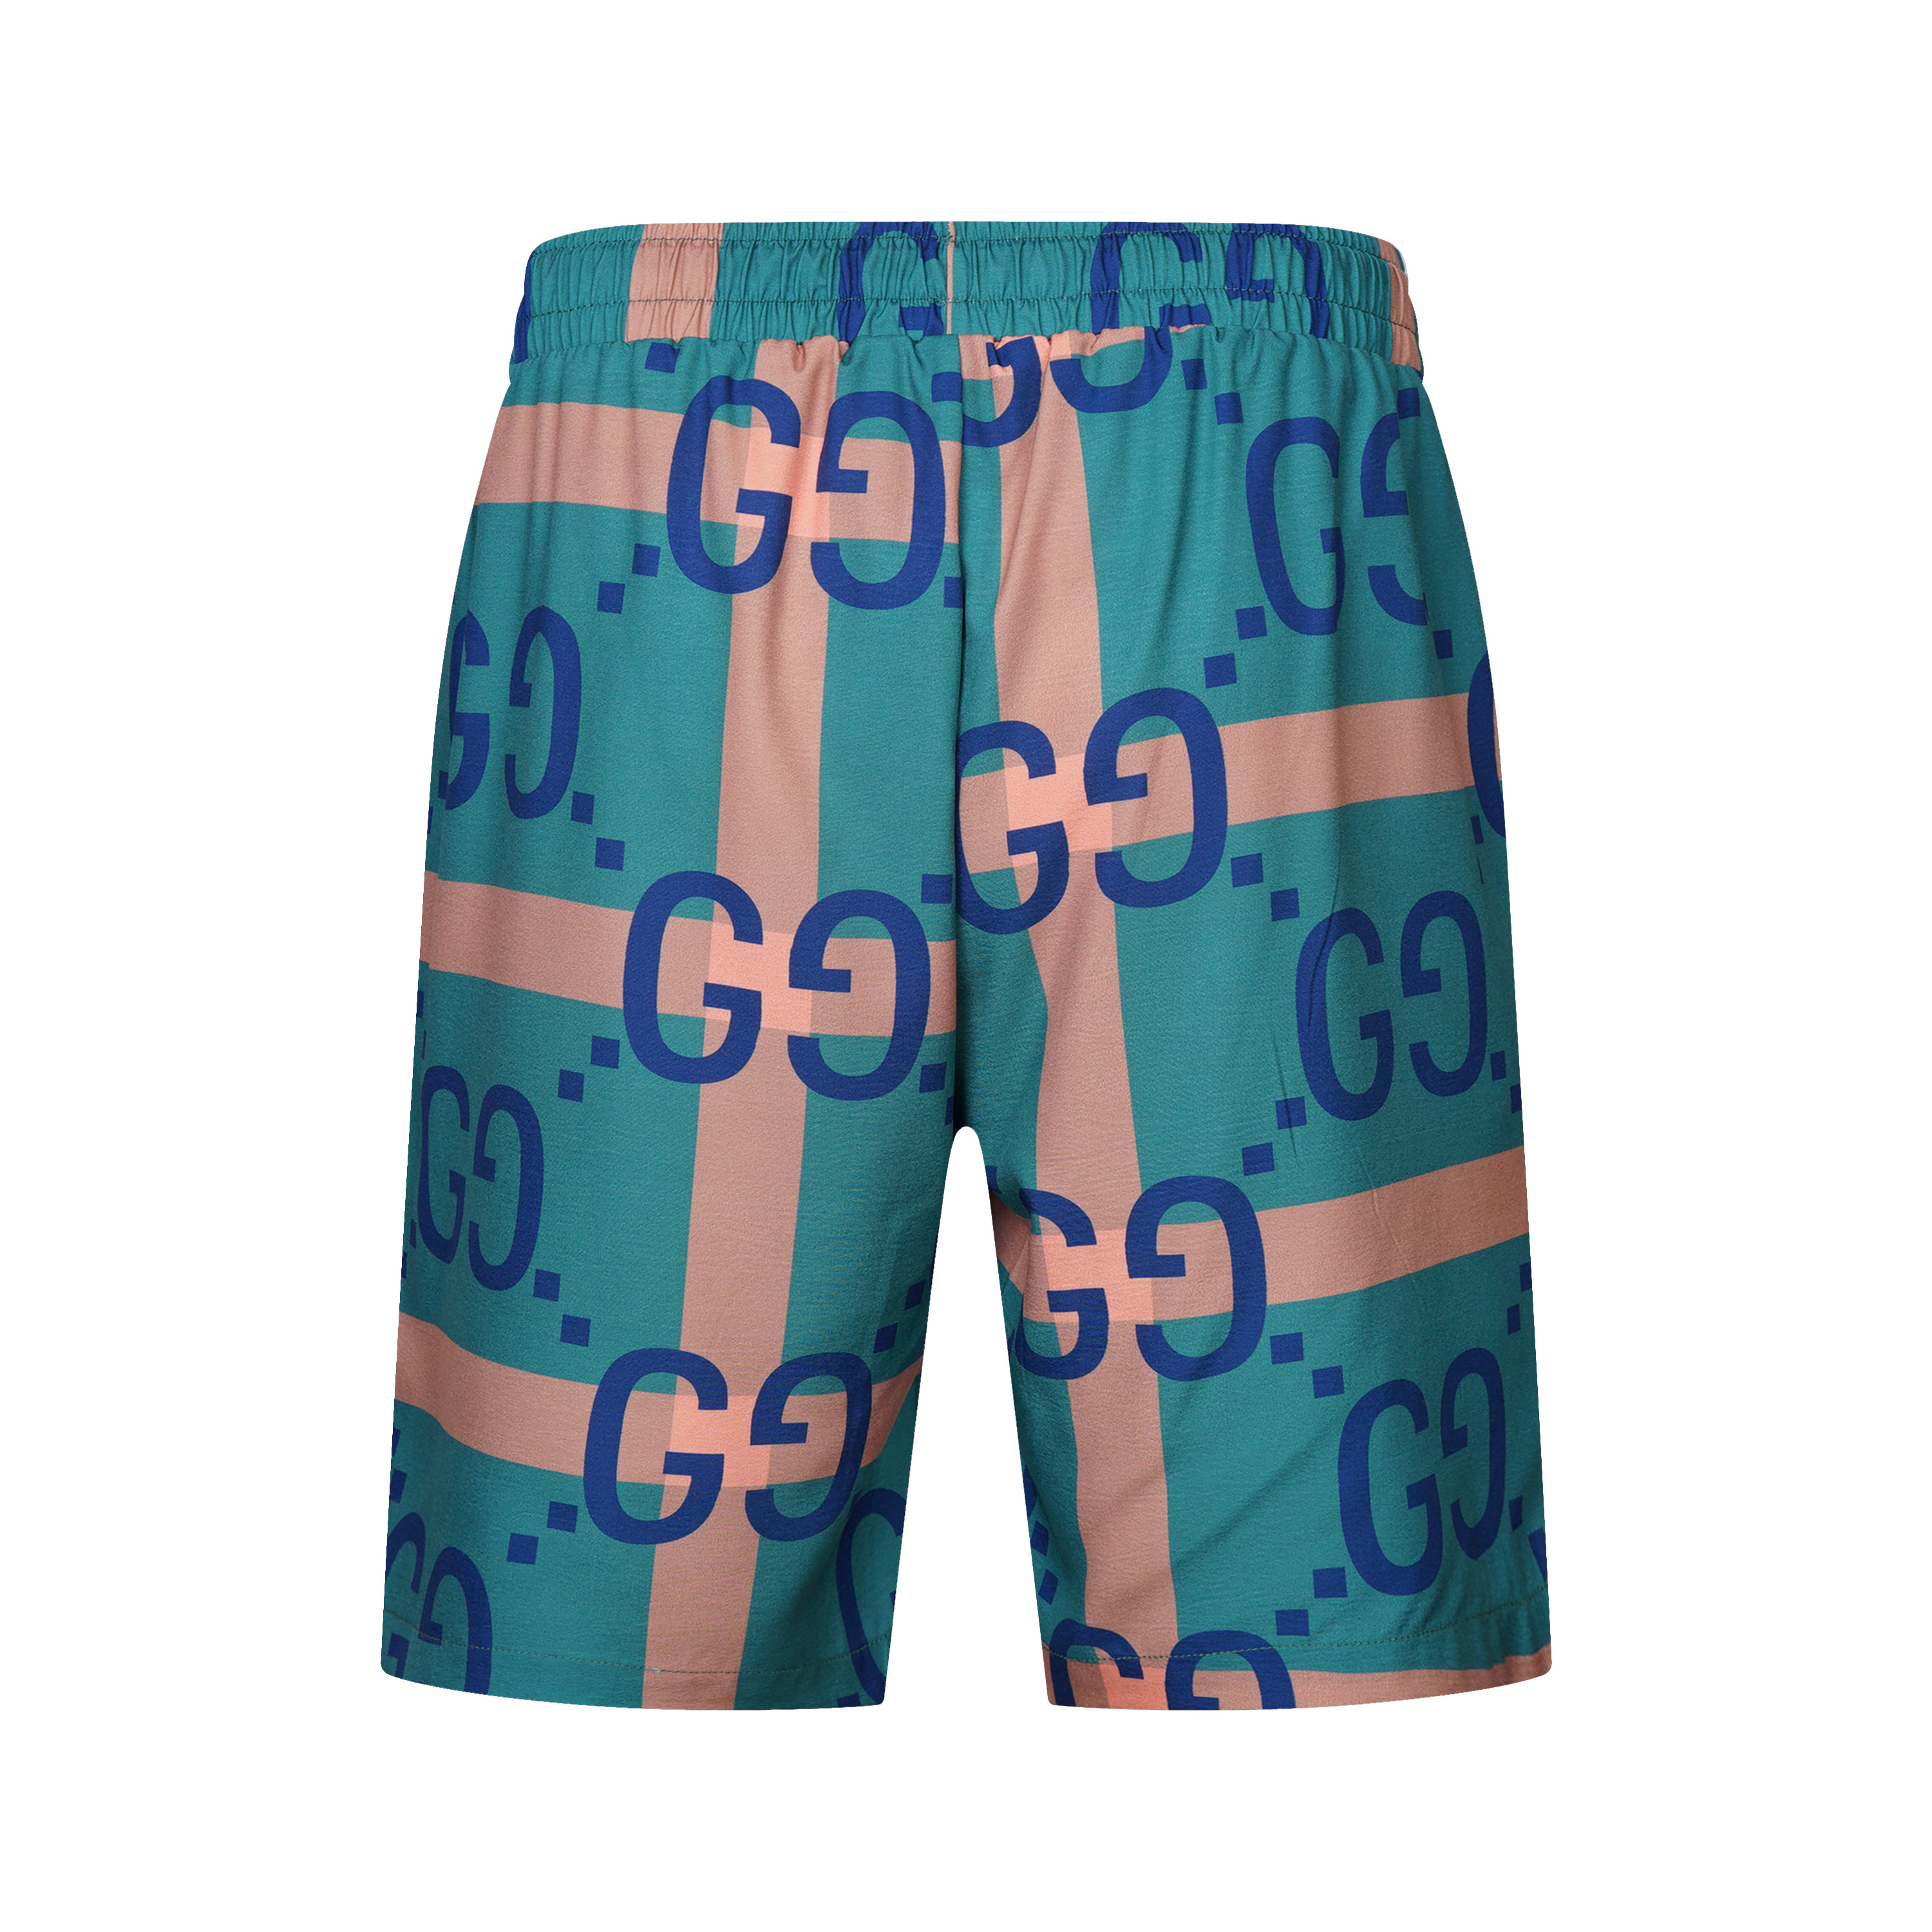 Gucci Boardshorts Unisex # 267612, cheap Shorts Gucci Shorts, only $33!